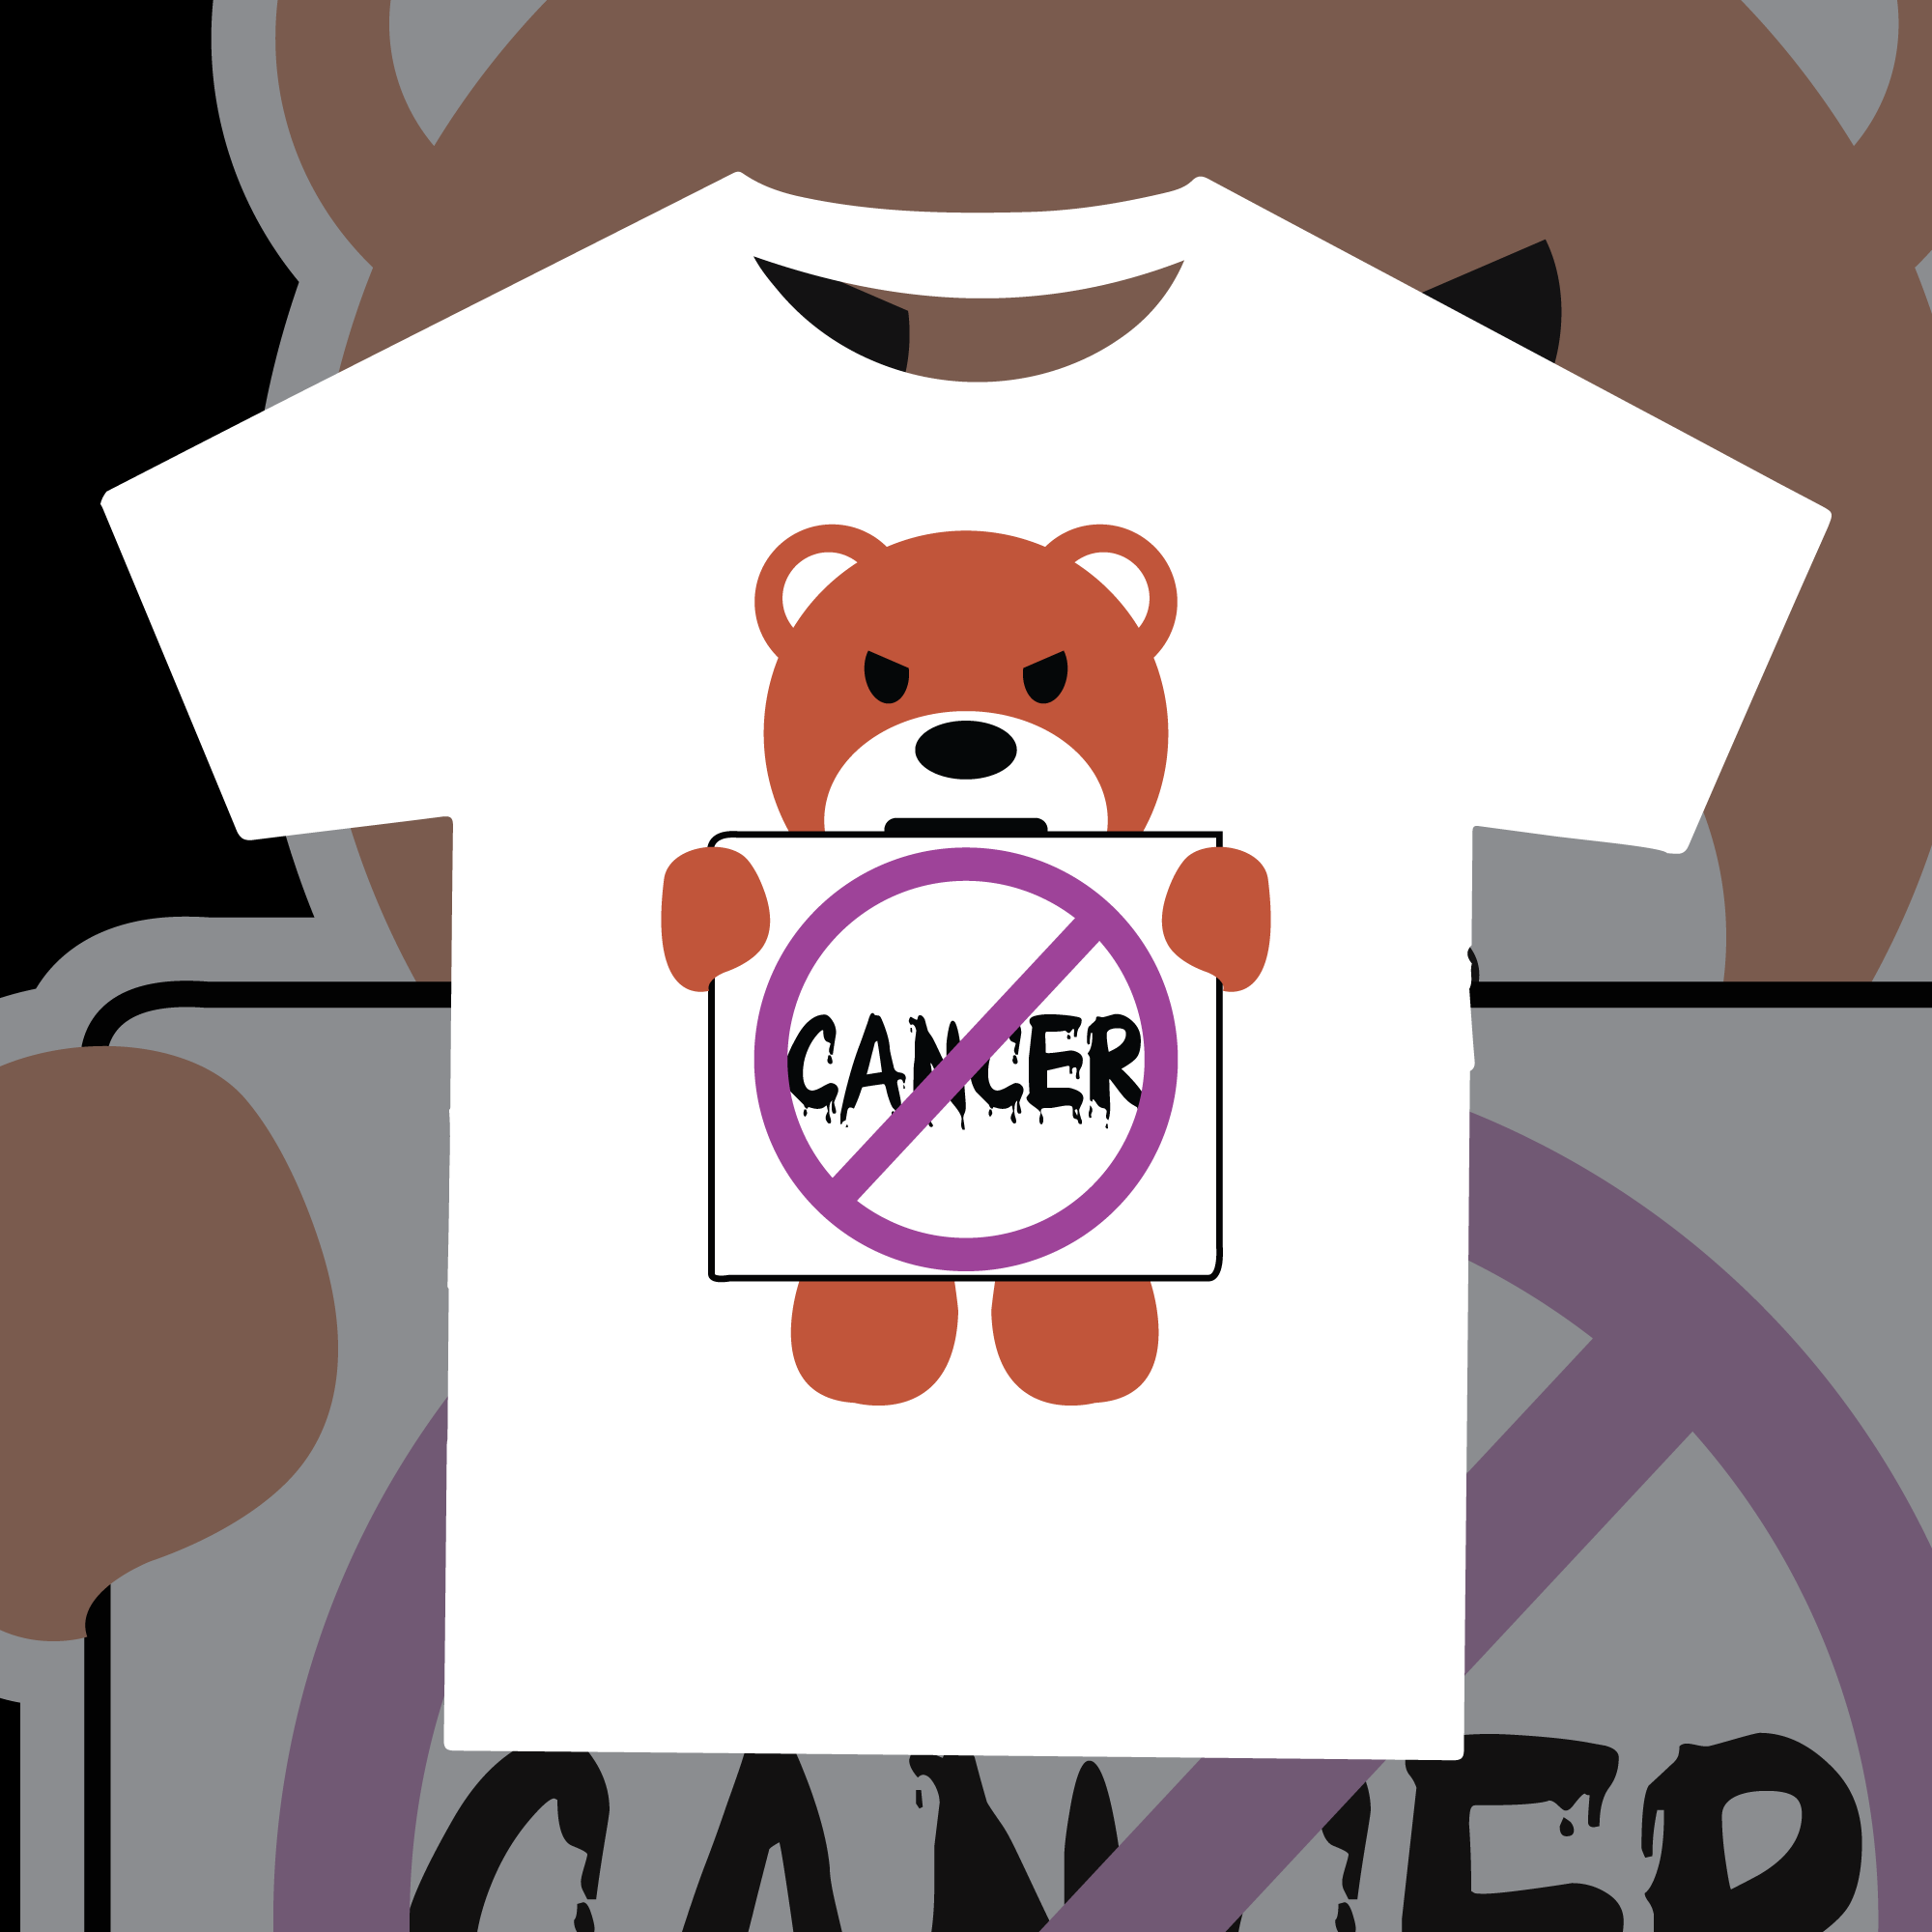 Cute Bear T-shirt - Roblox